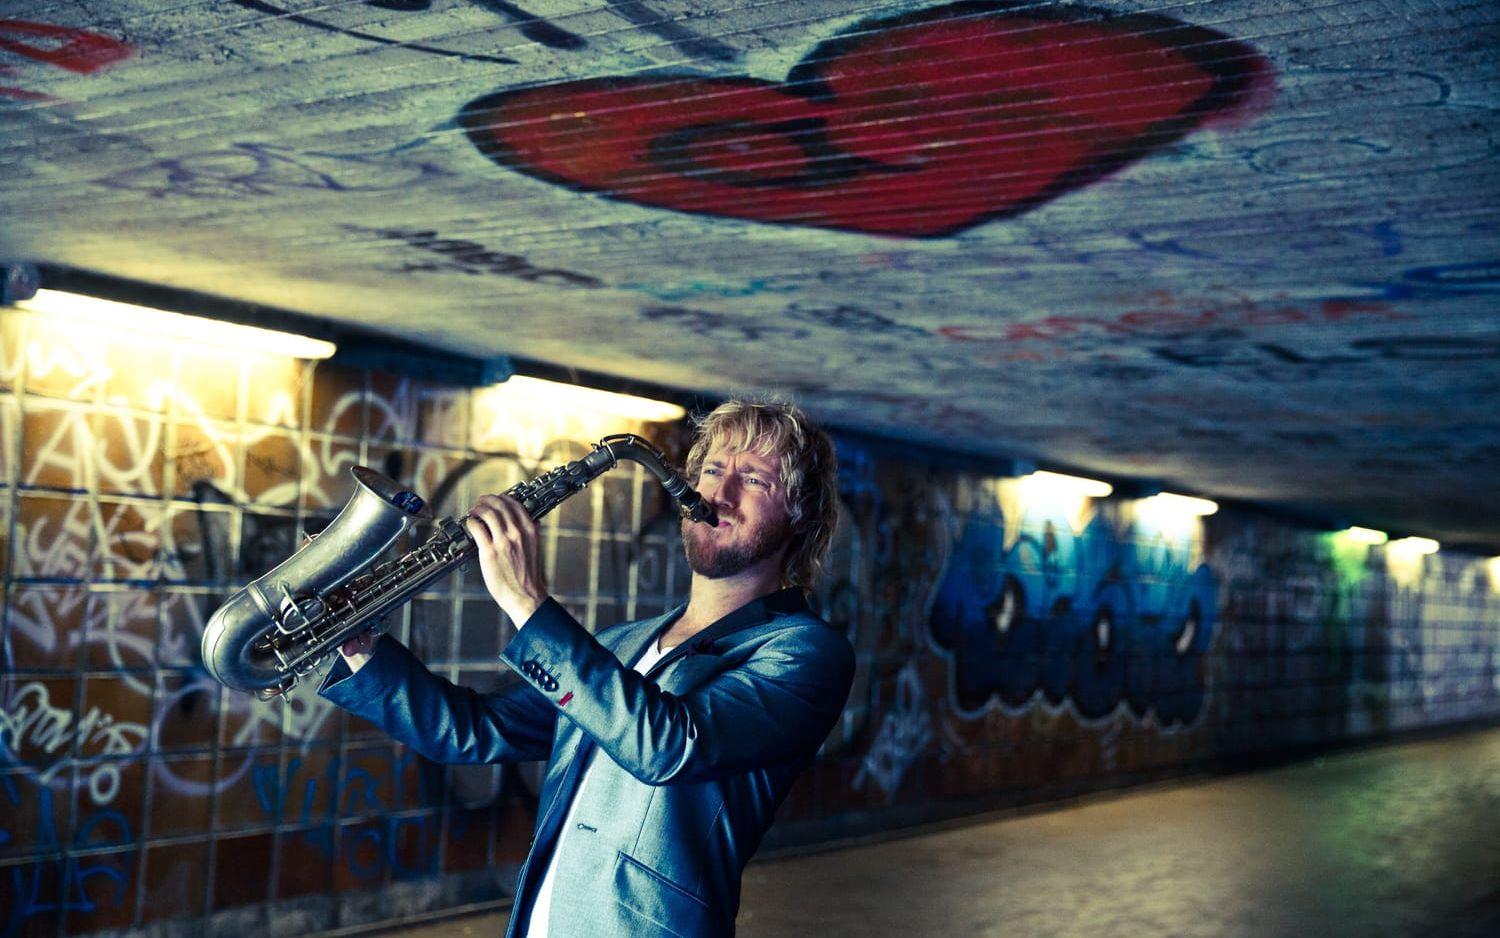 Den sjungande saxofonisten Mads Mathias har imponerat under sina tidigare konserter i Halland. Bild: Mette Kramer